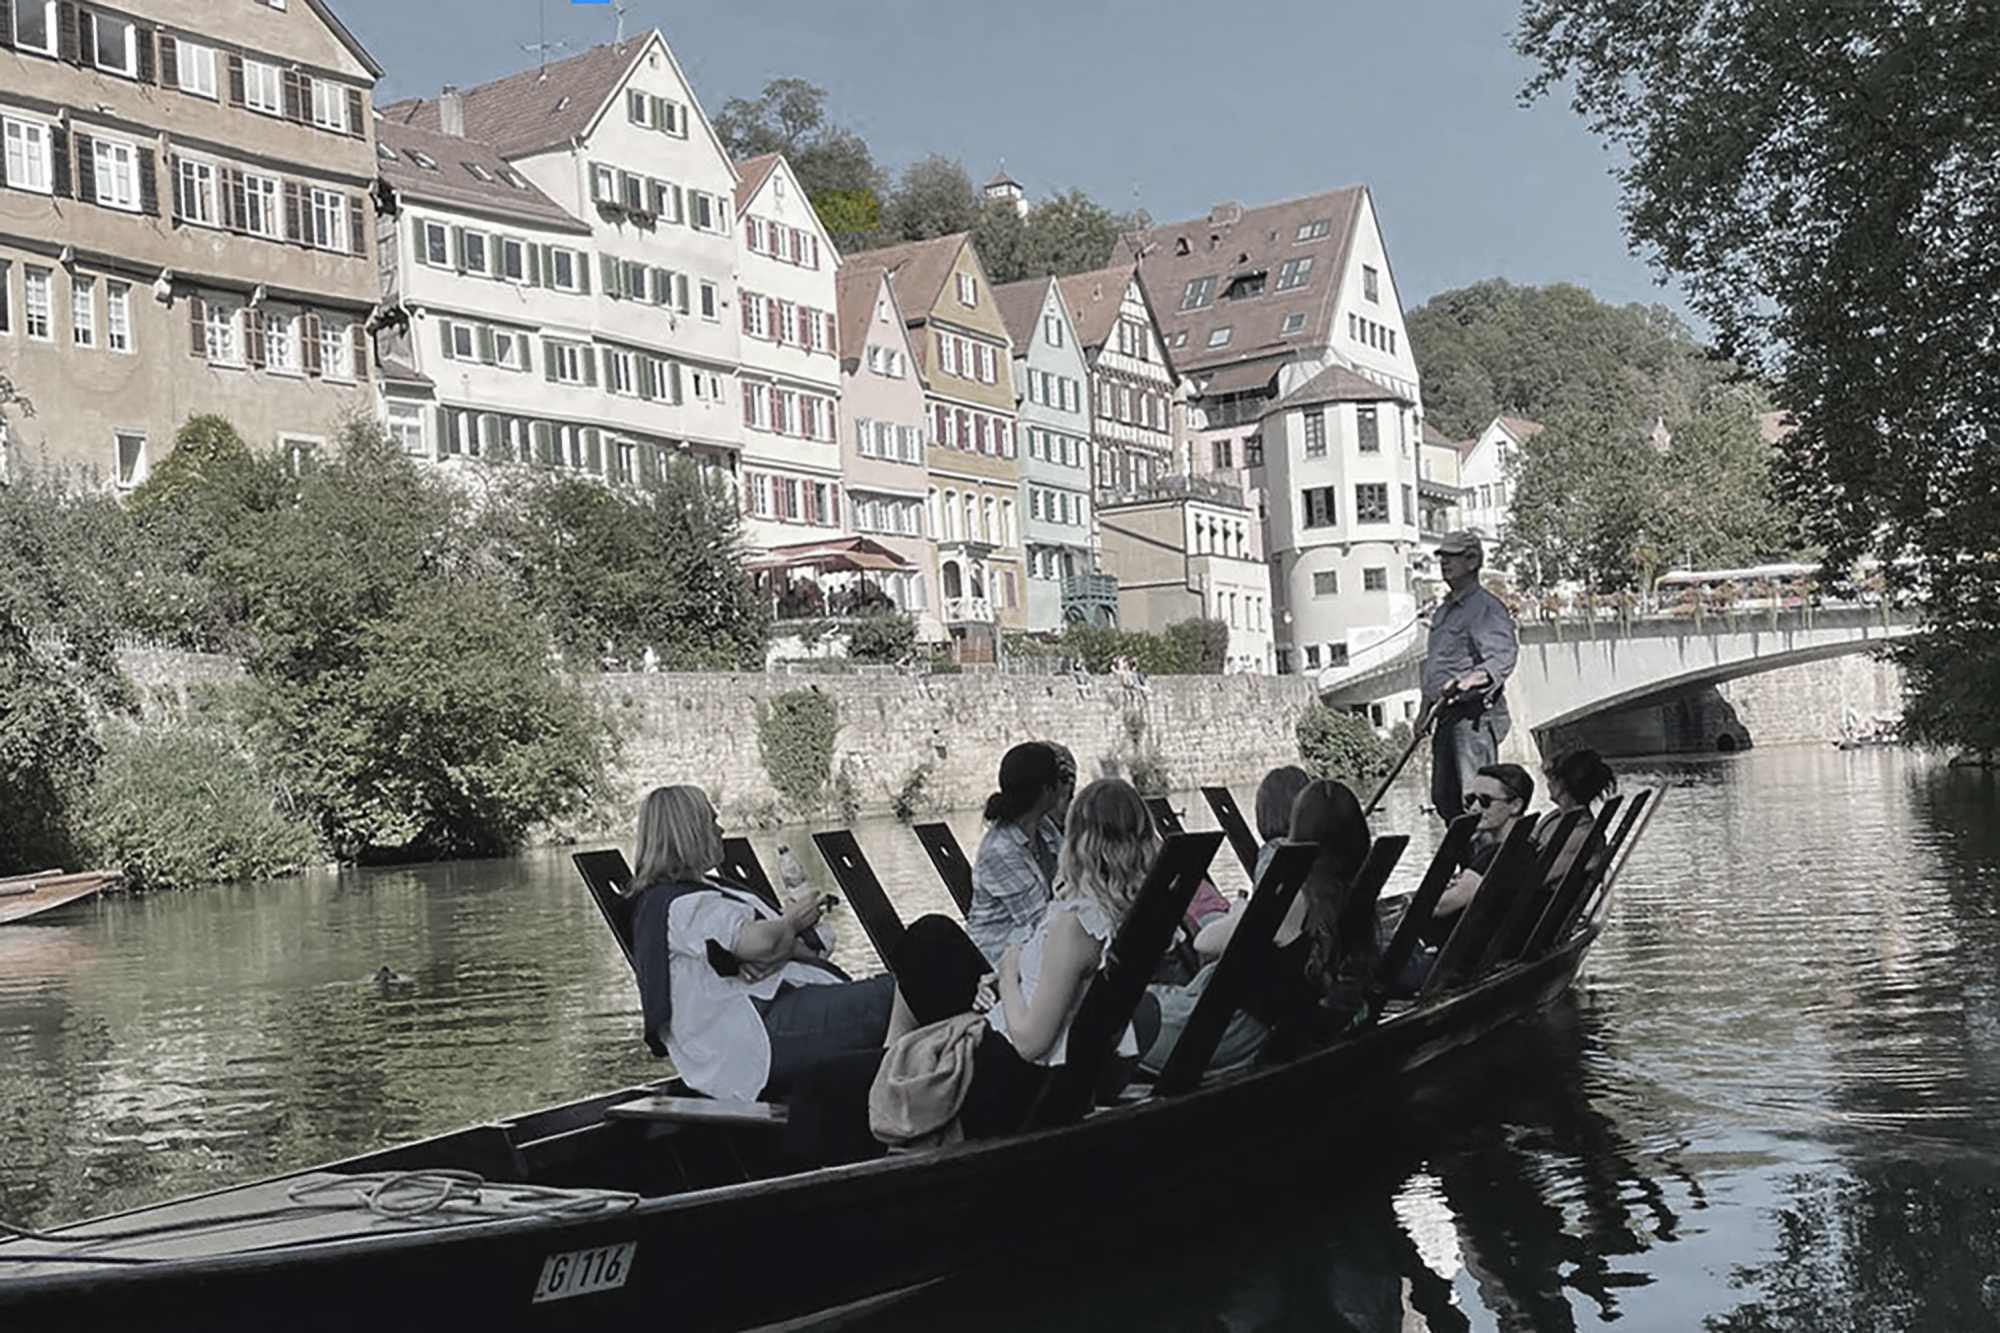 Bürosommerfest mit Stocherkahnfahrt auf dem Neckar ({project_images:field_row_count})